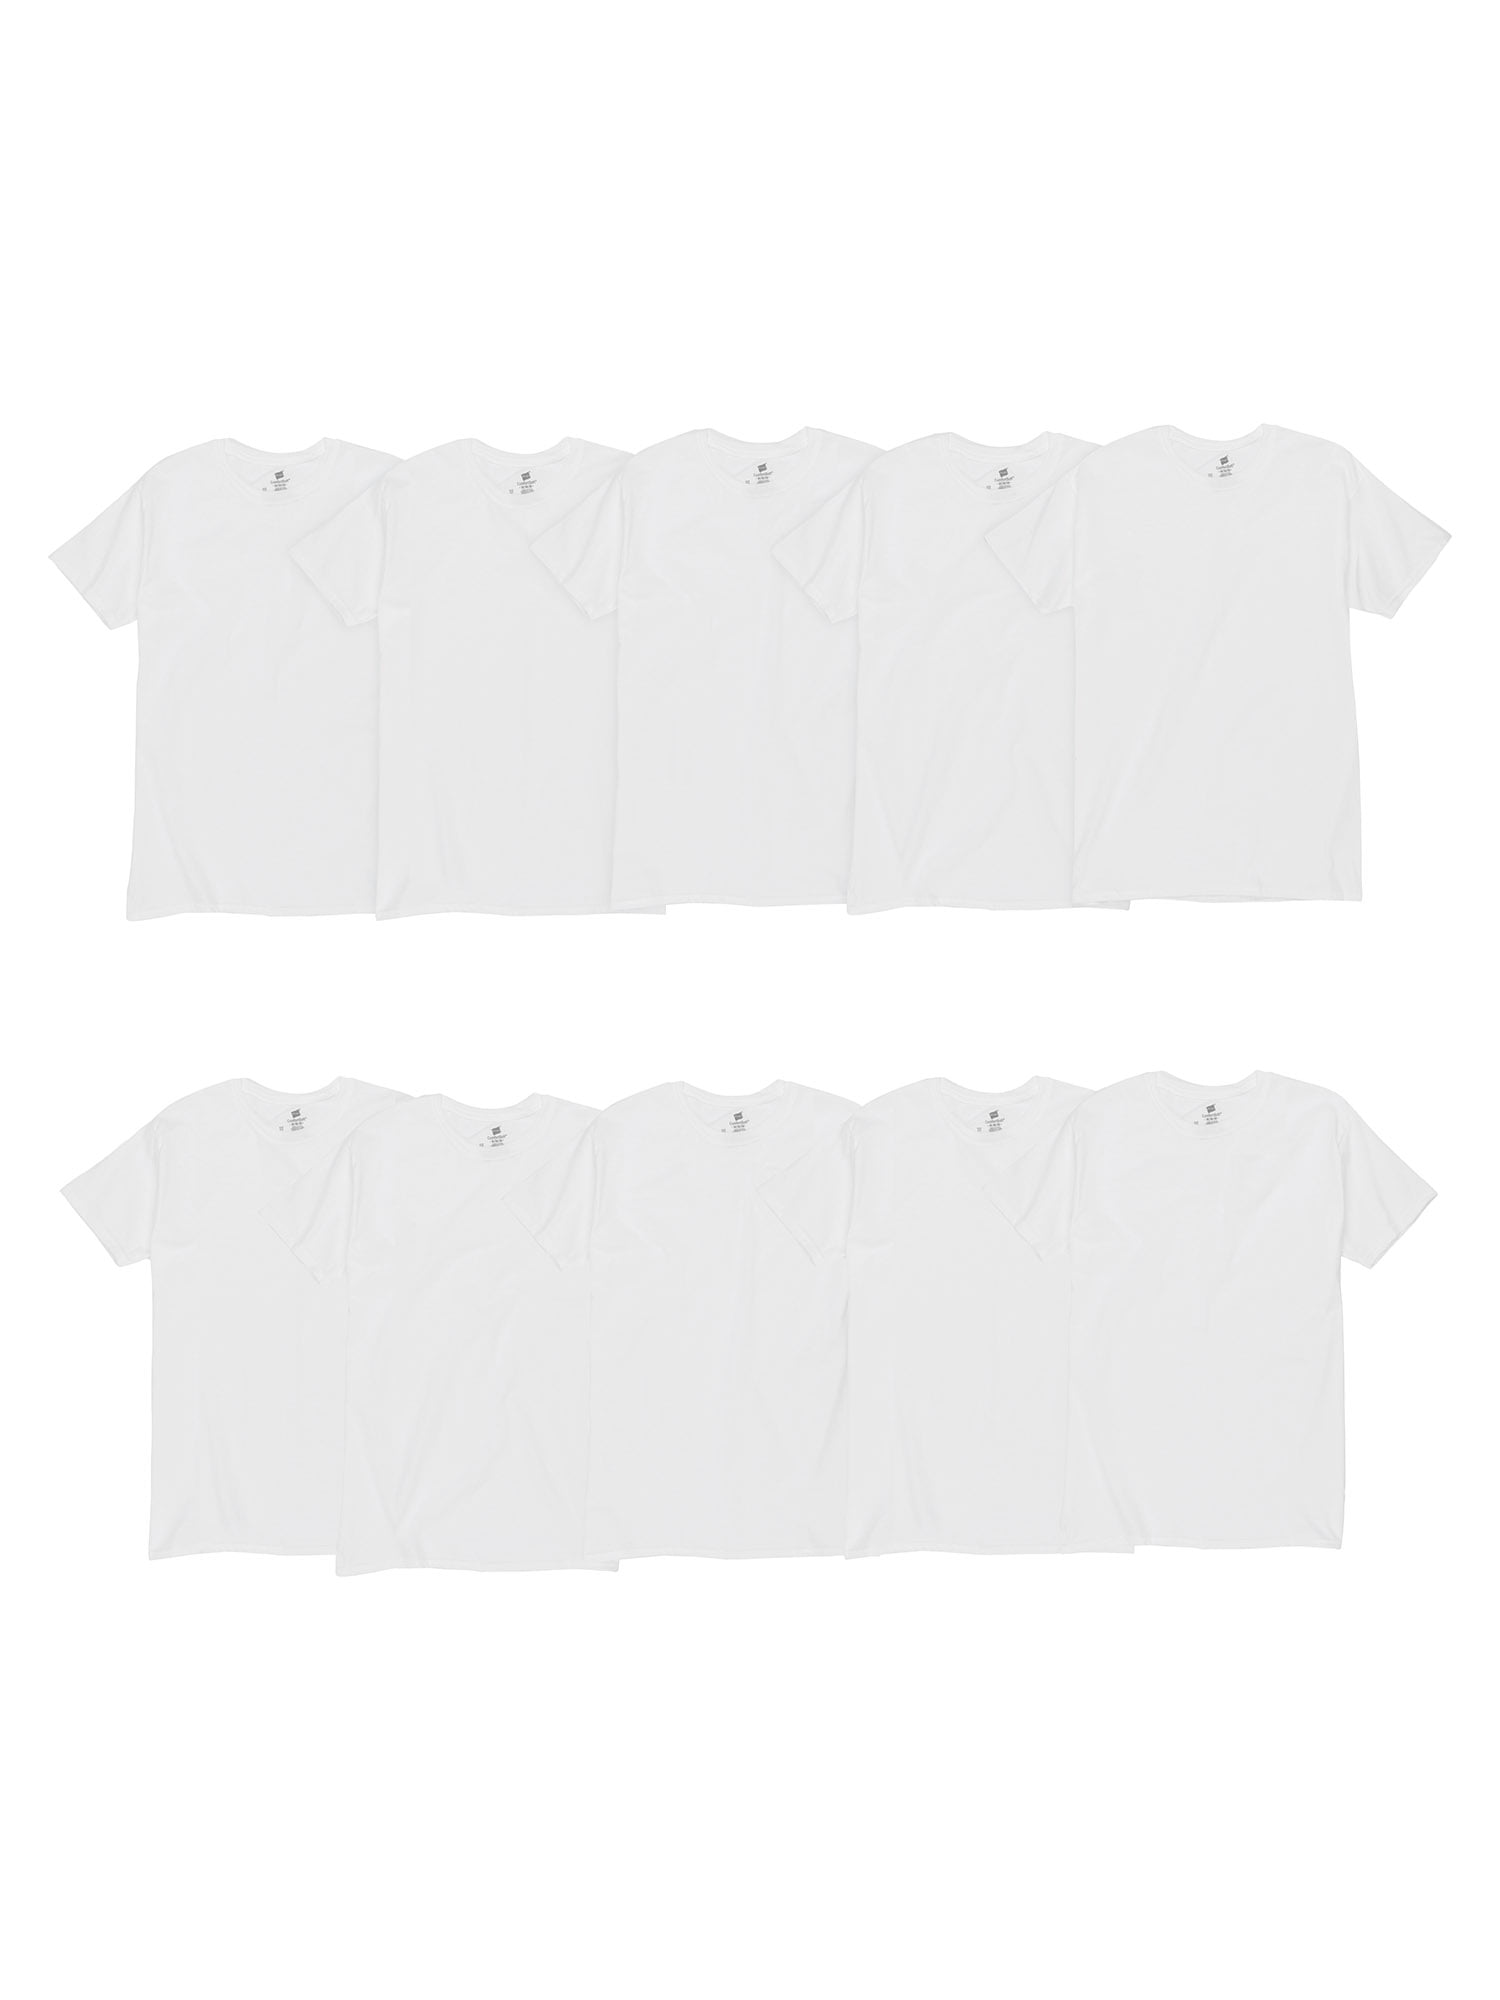 Hanes - Hanes Men's White Crew Neck T-Shirt, 10-Pack - Walmart.com ...